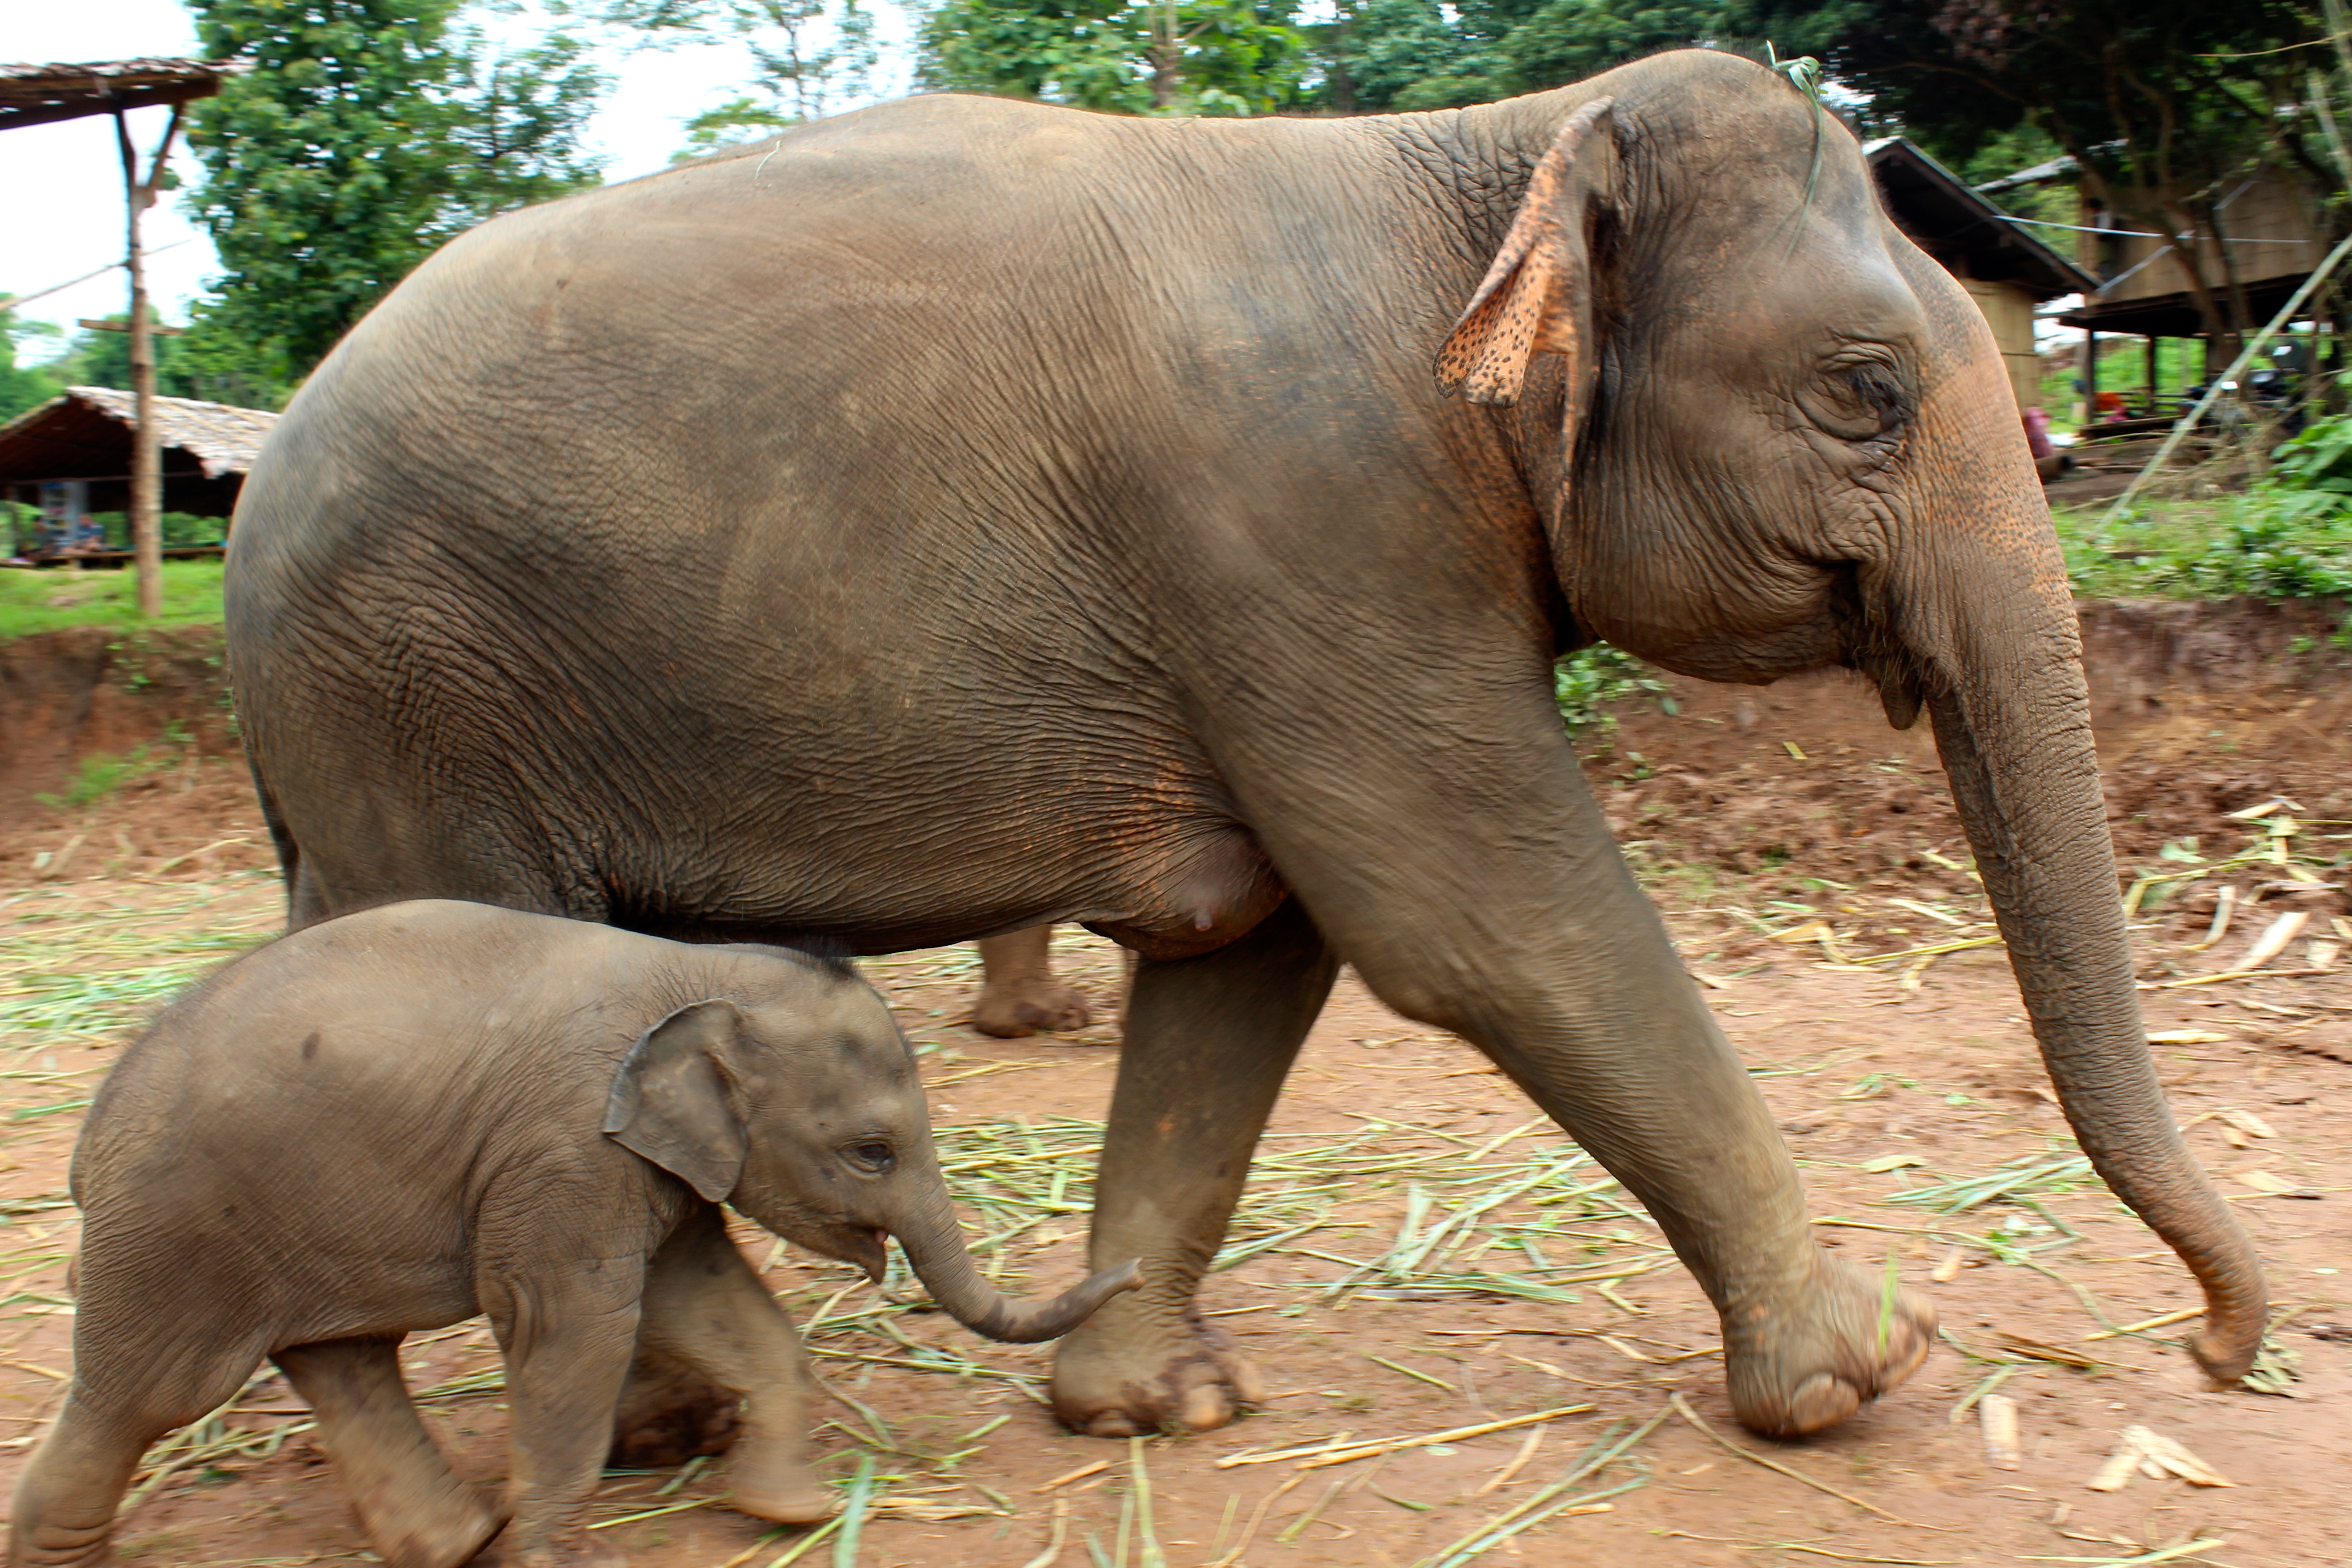 Mom & baby at The Elephant Jungle Sanctuary.